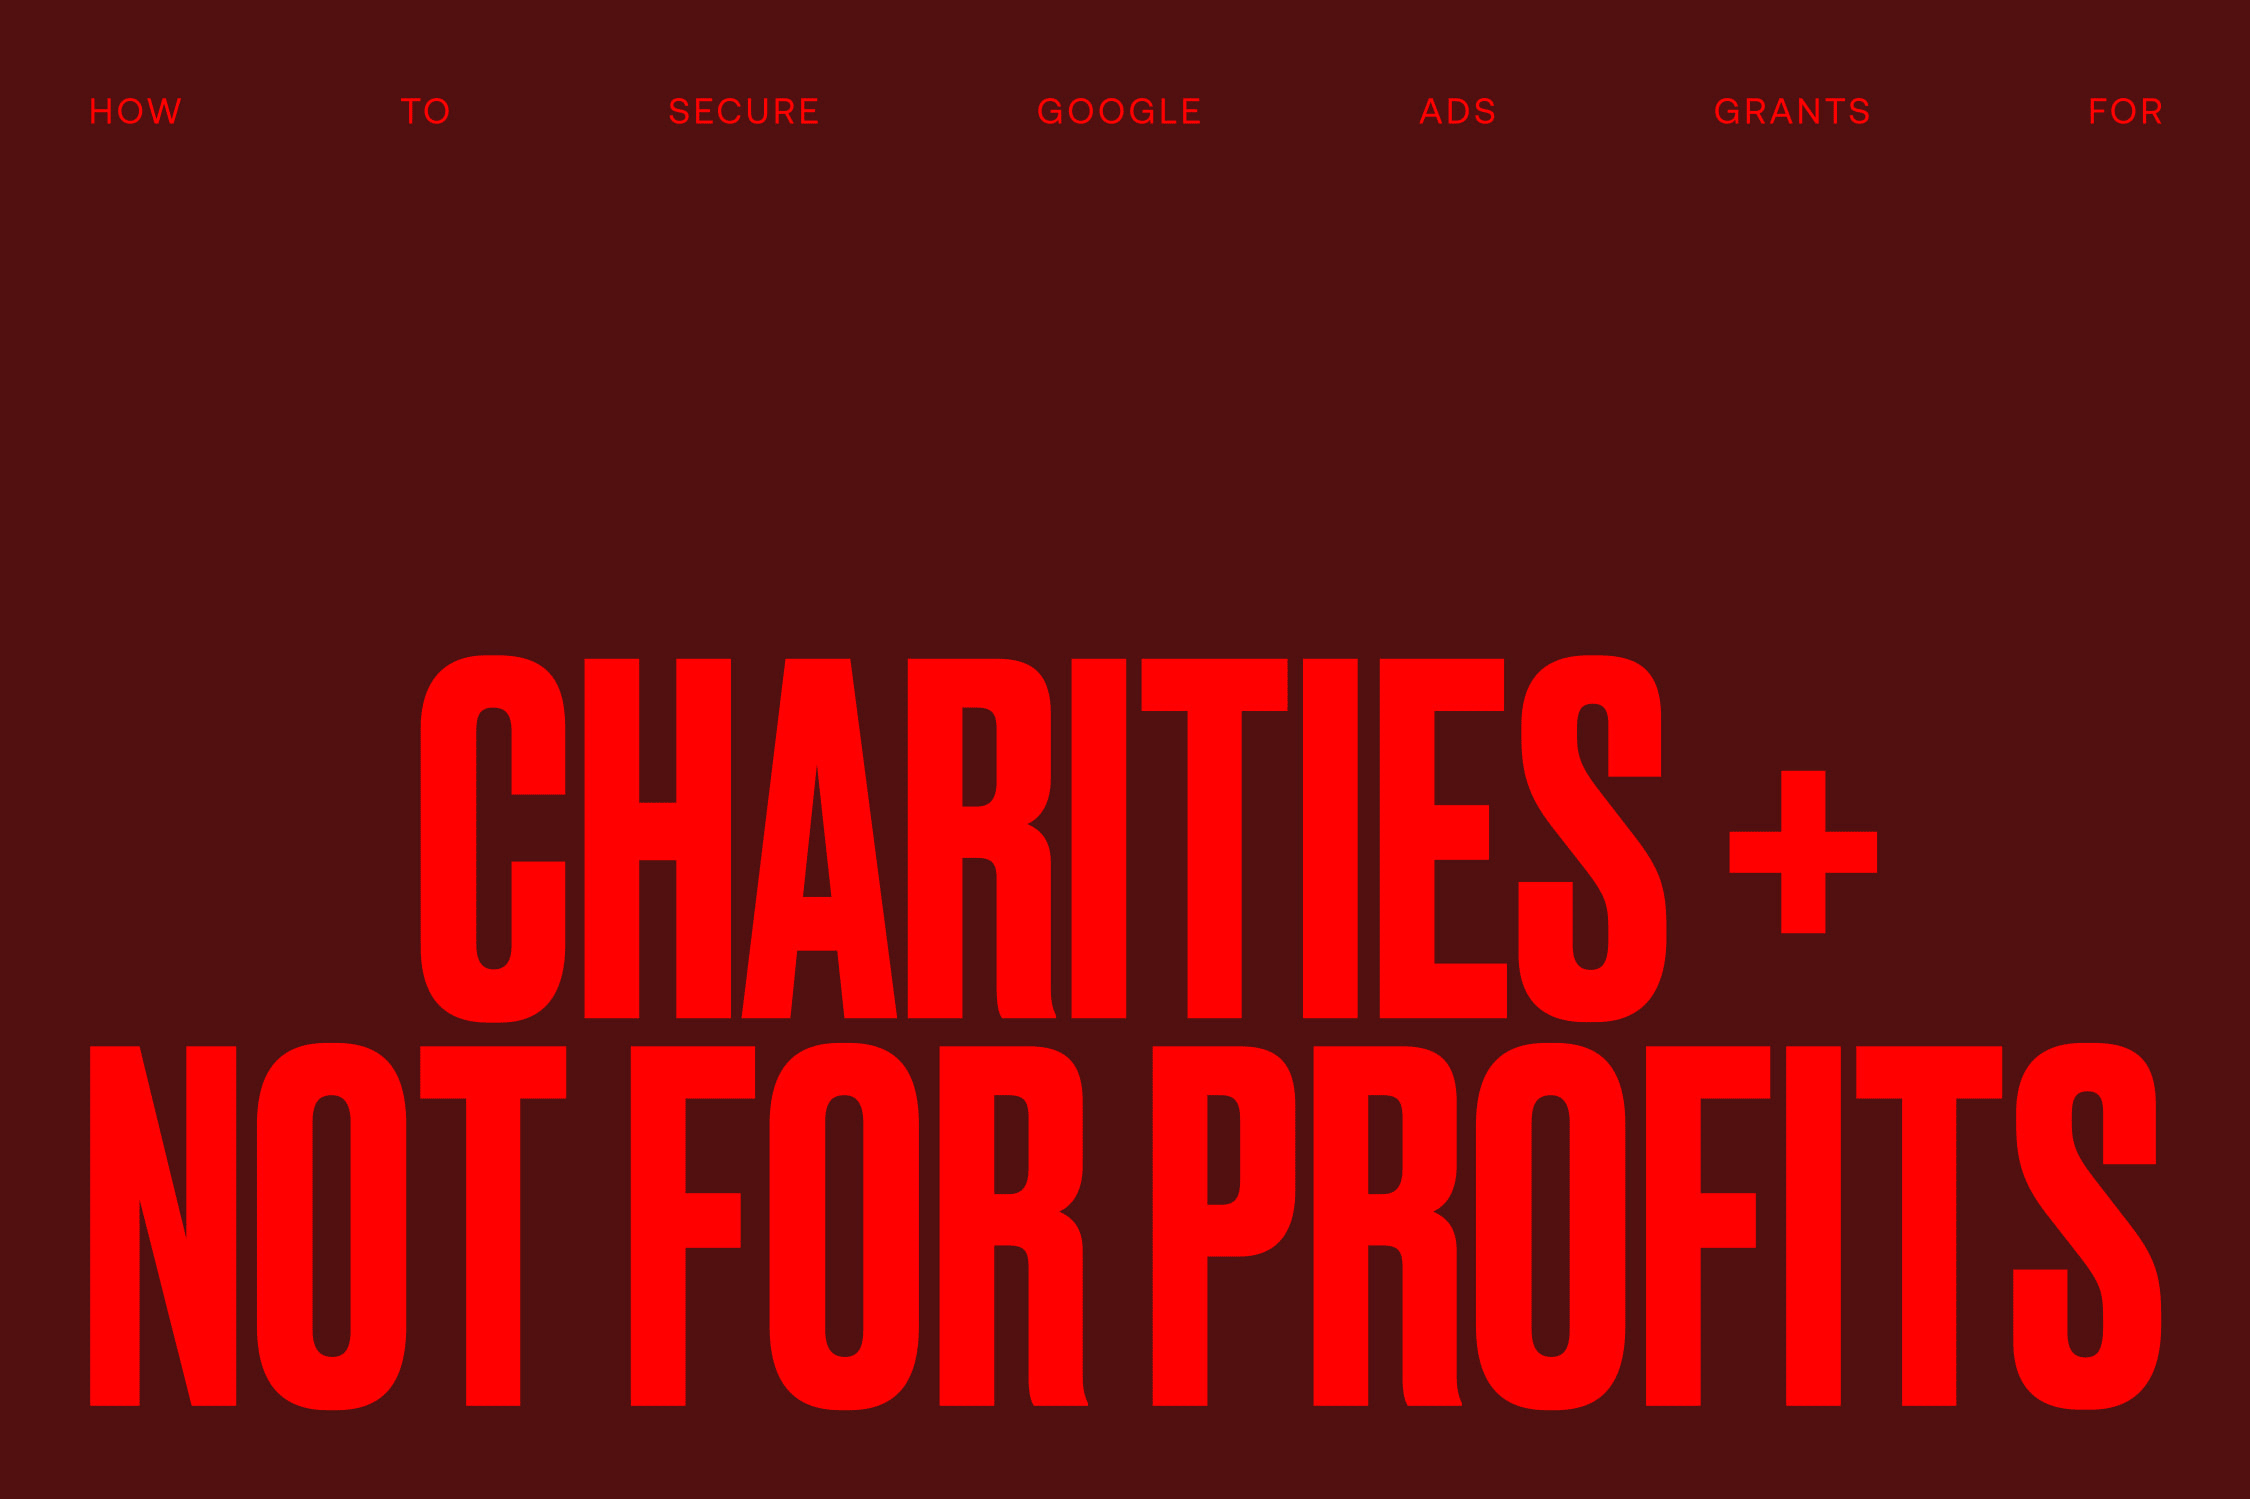 Google grants charity melbourne agency